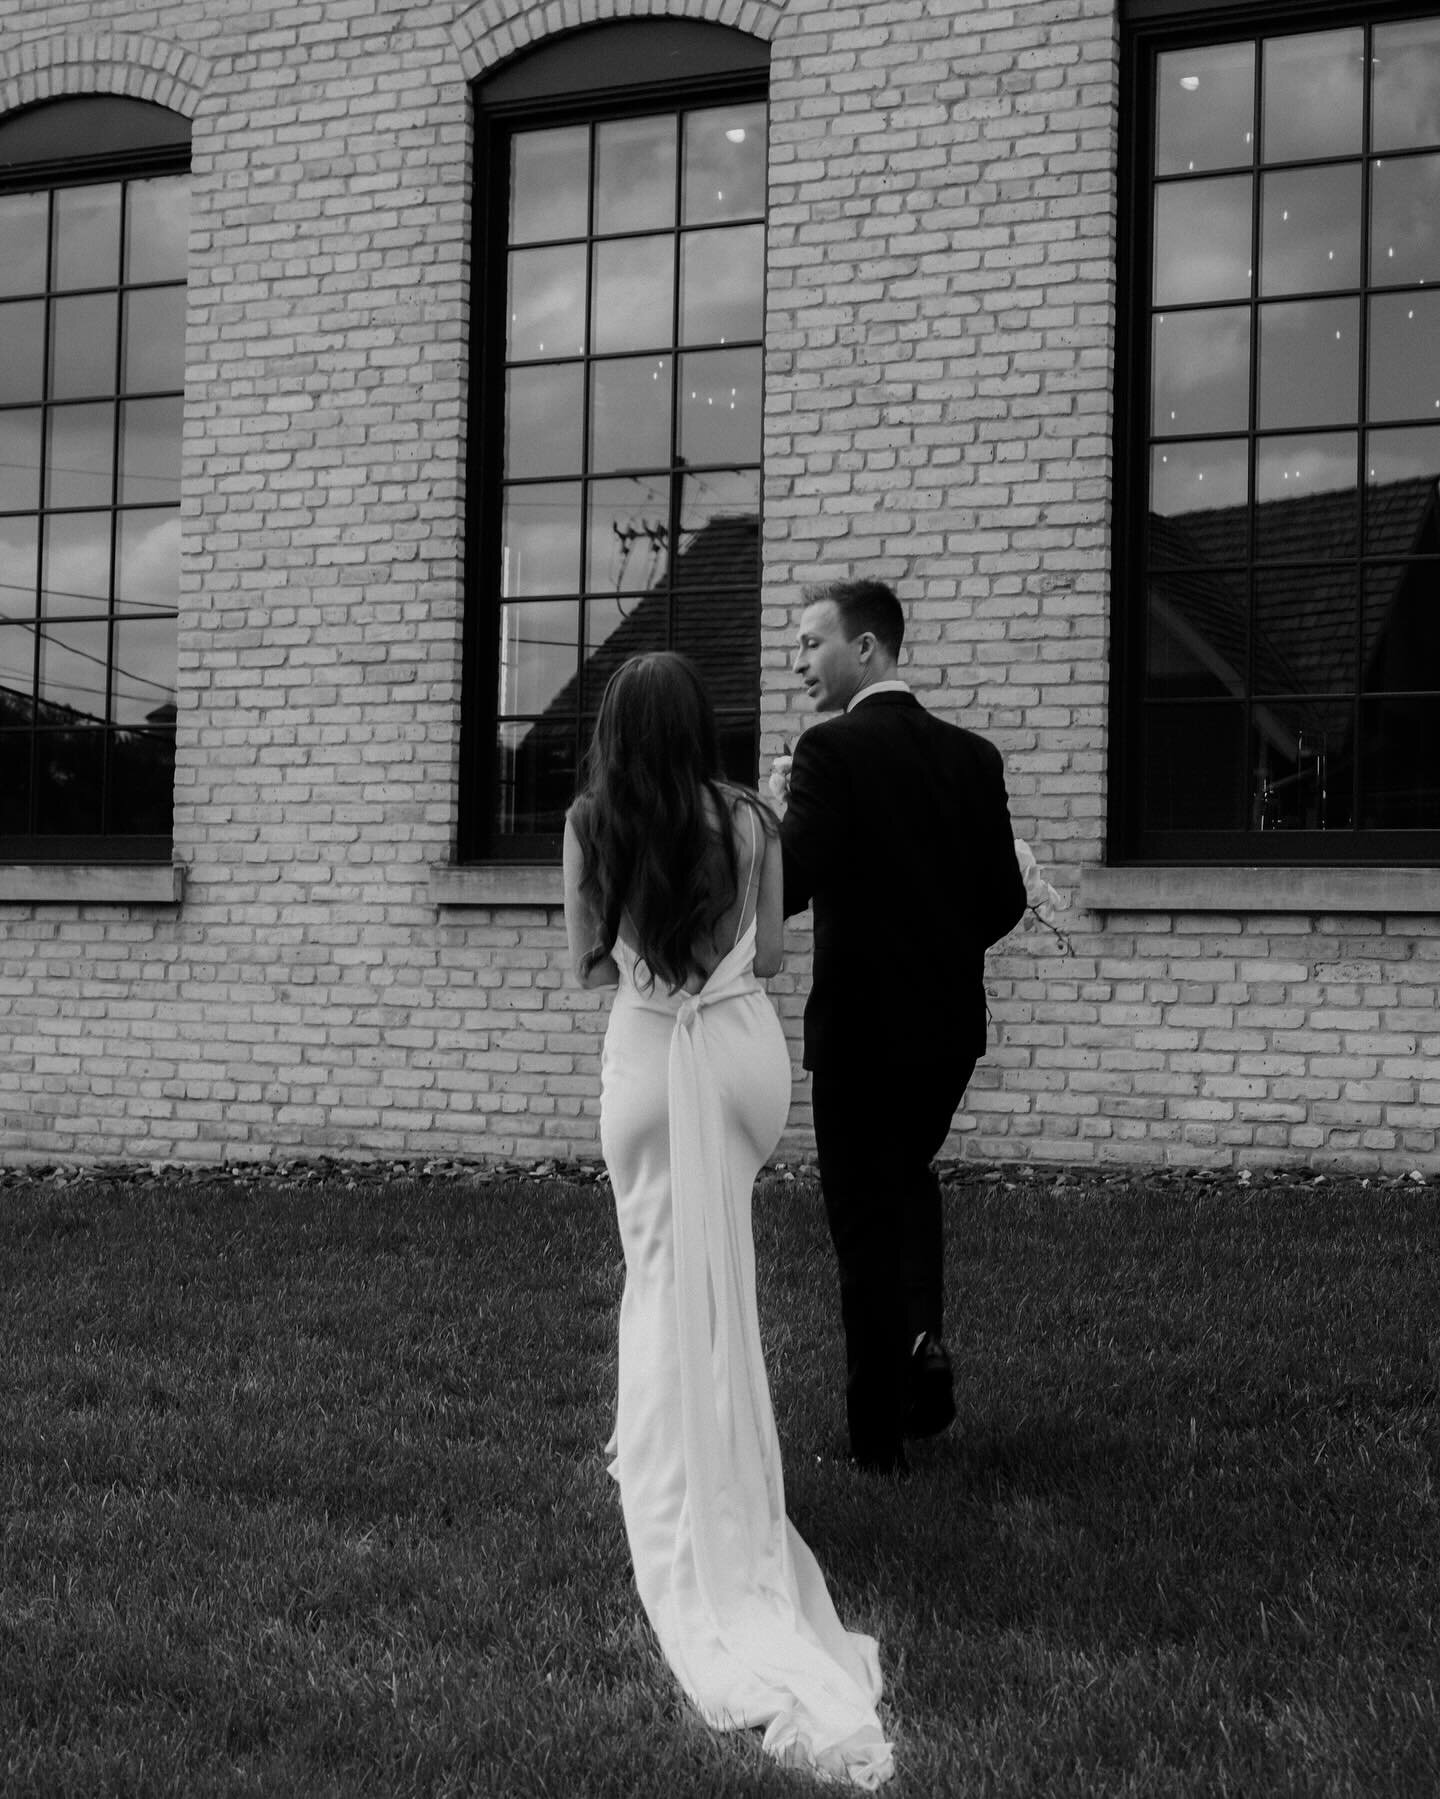 the in between moments 🖤

.
.
.
second shot @brookeemilyphoto 
#daniellerosephotography #daniellerosephoto #DRP #chicago #chicagophotographer #engagement #engagementphotographer #wedding #weddingphotographer #midwest #midwestphotographer #illinoisph